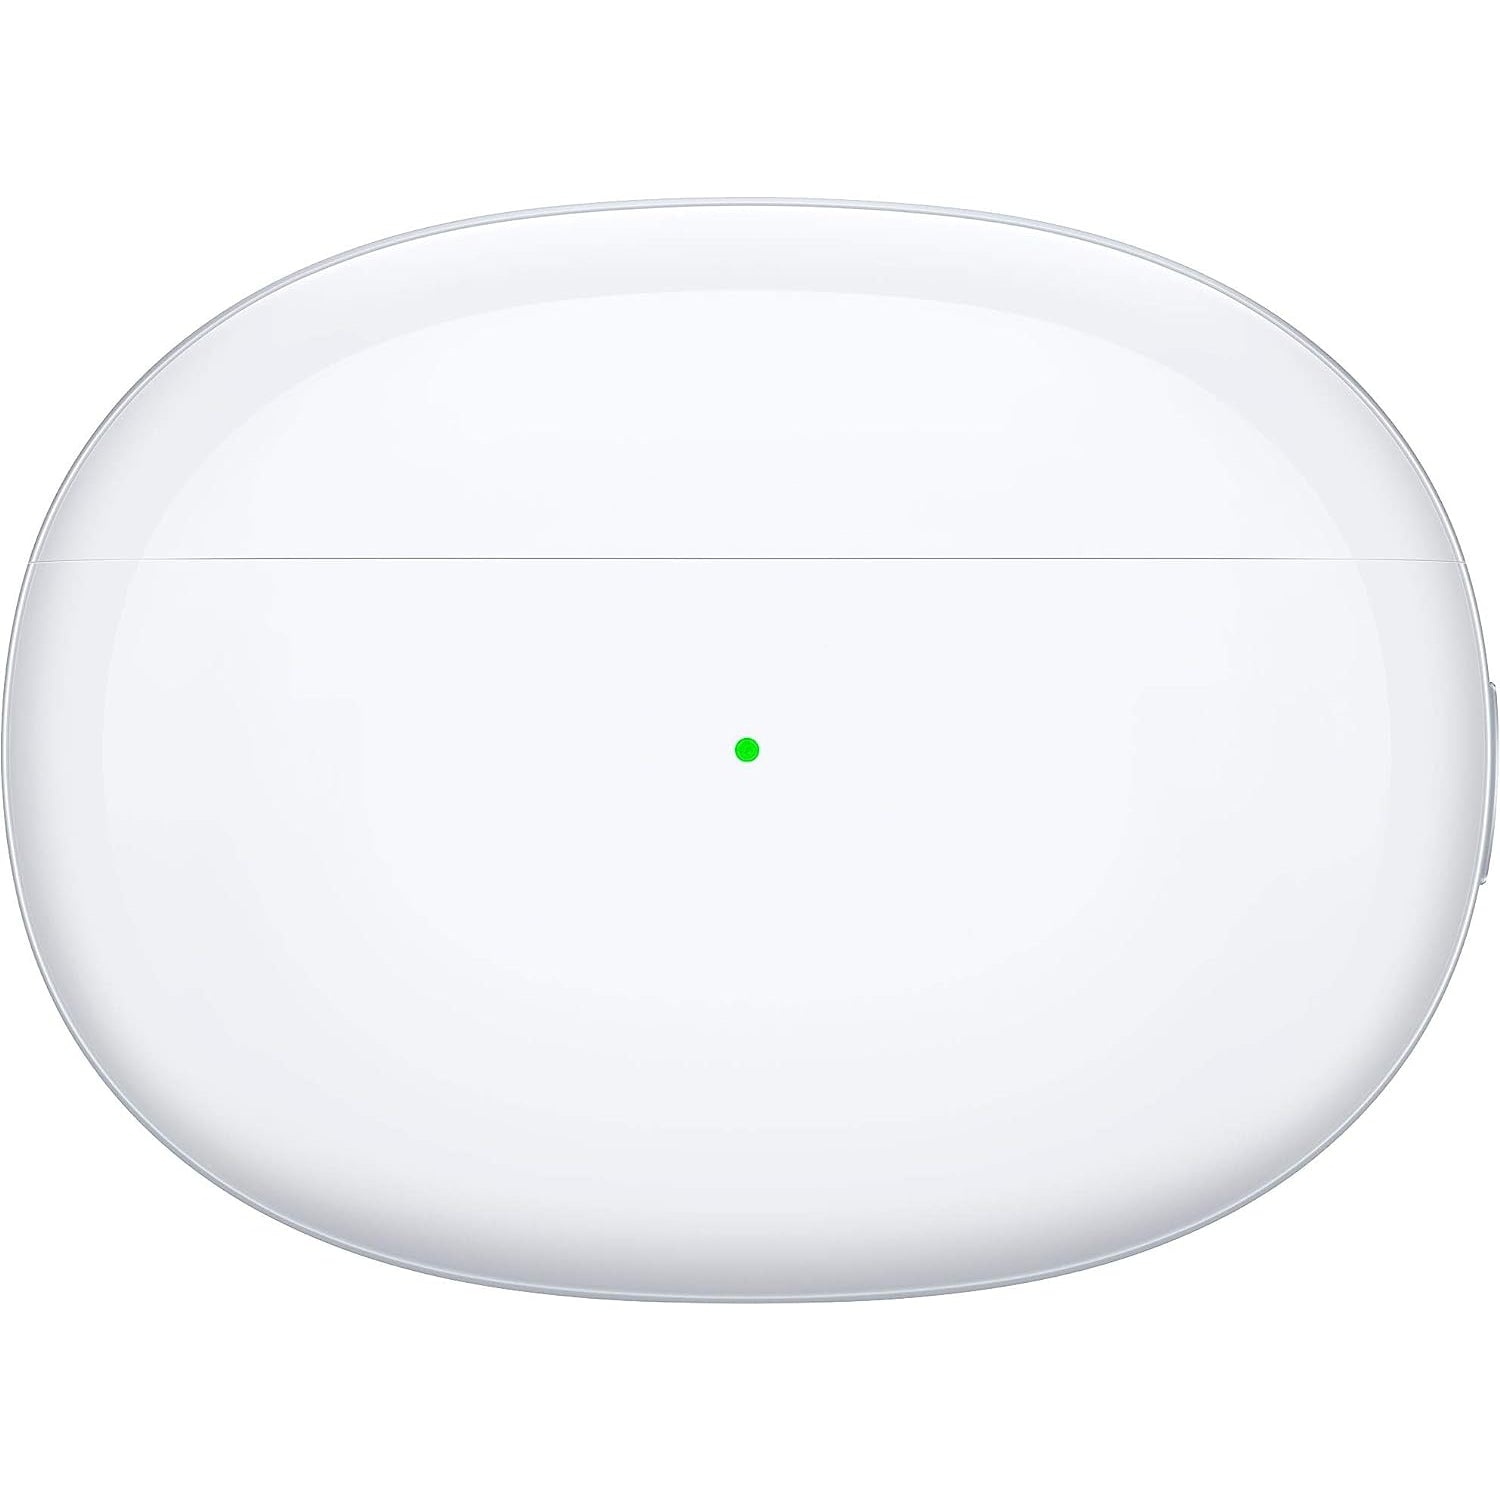 Oppo Enco X Wireless Earbuds - White